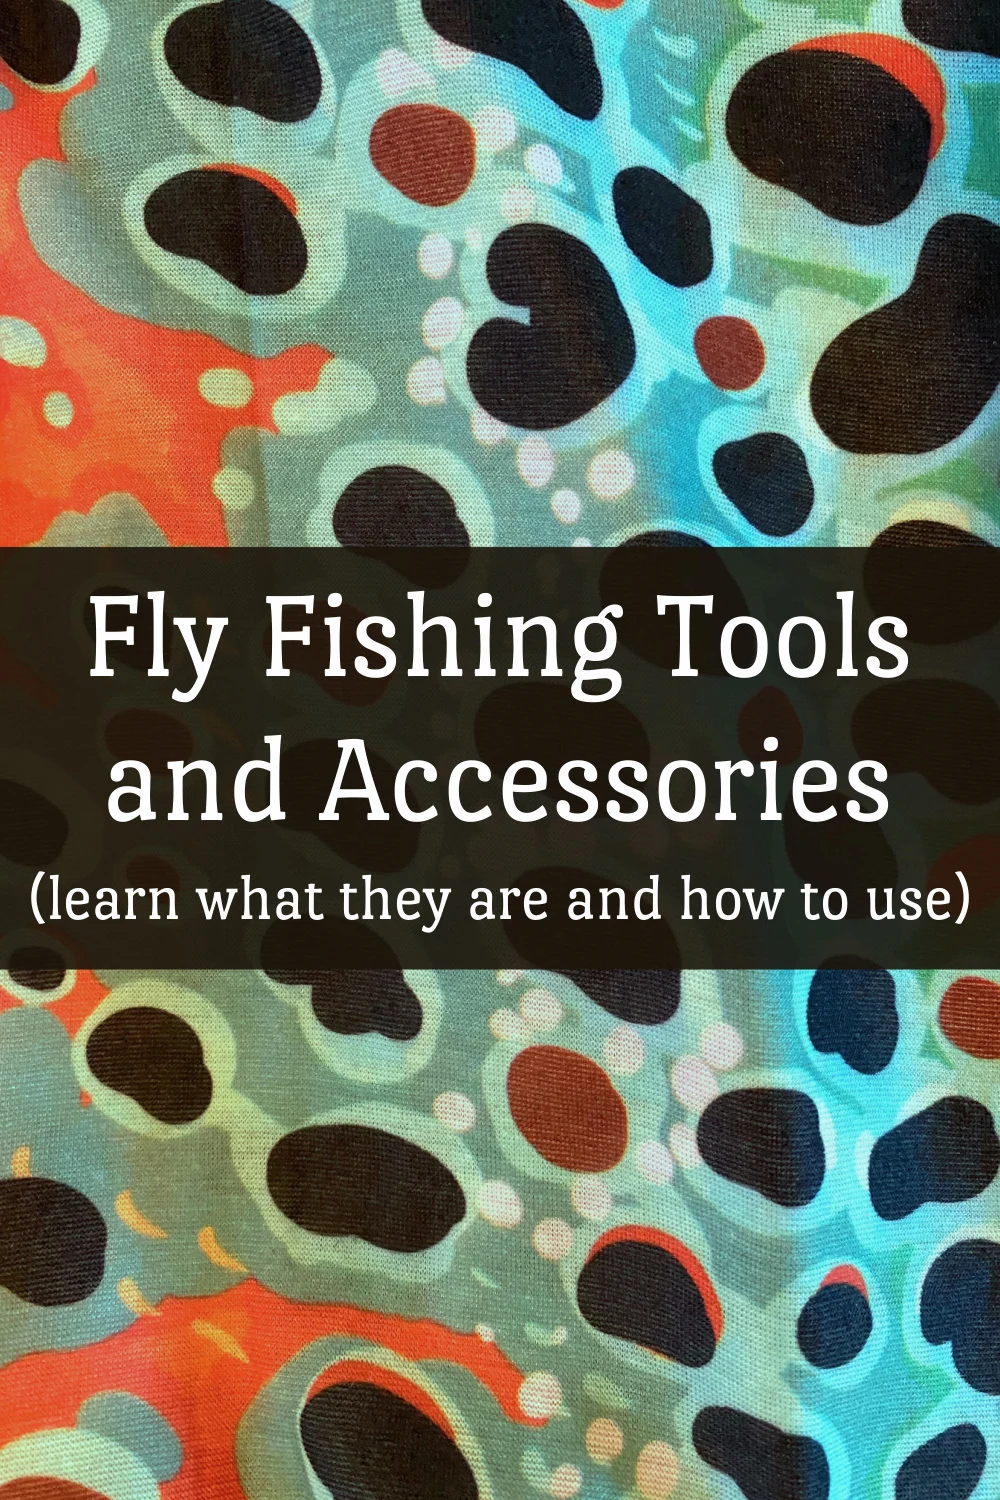 https://rodandreelflyfishing.com/wp-content/uploads/2021/09/Fly-Fishing-Tools-and-Accessories.jpg.webp